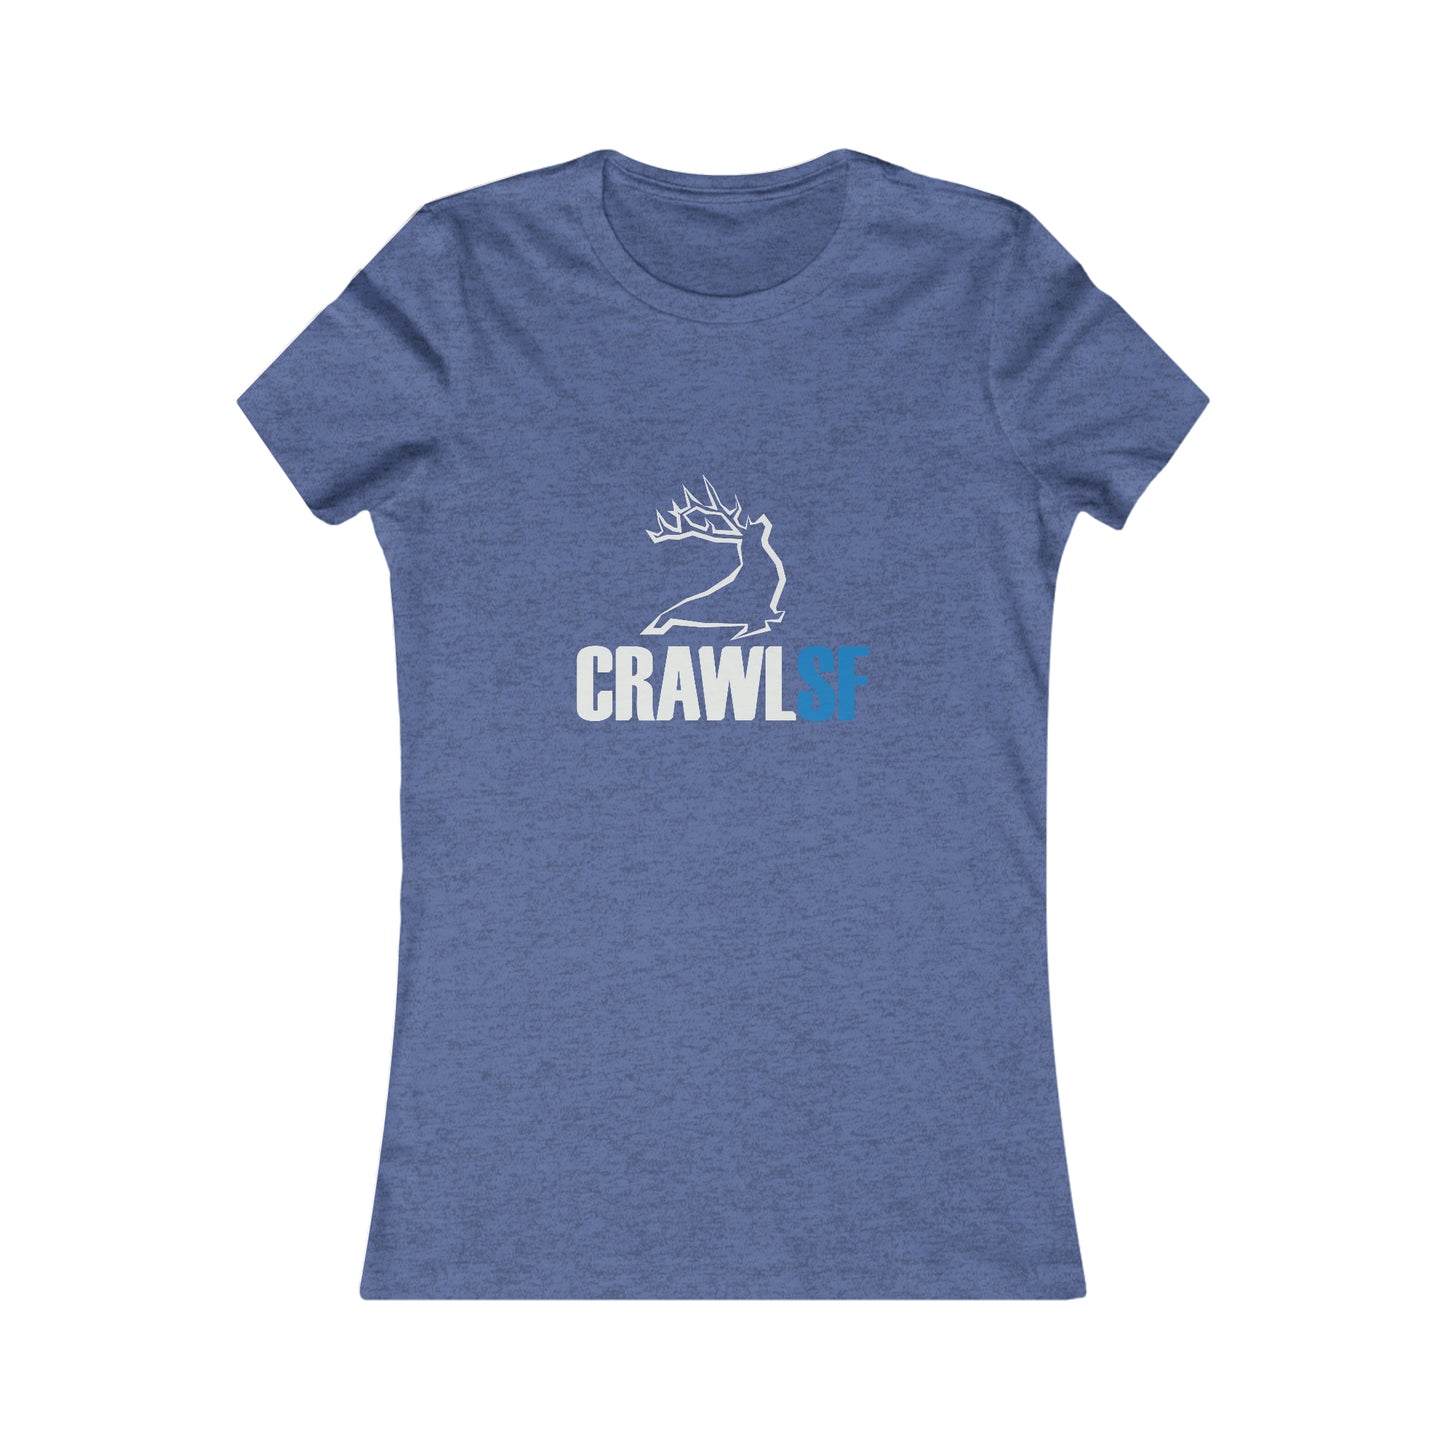 Women's CrawlSF Crew Neck T-Shirt